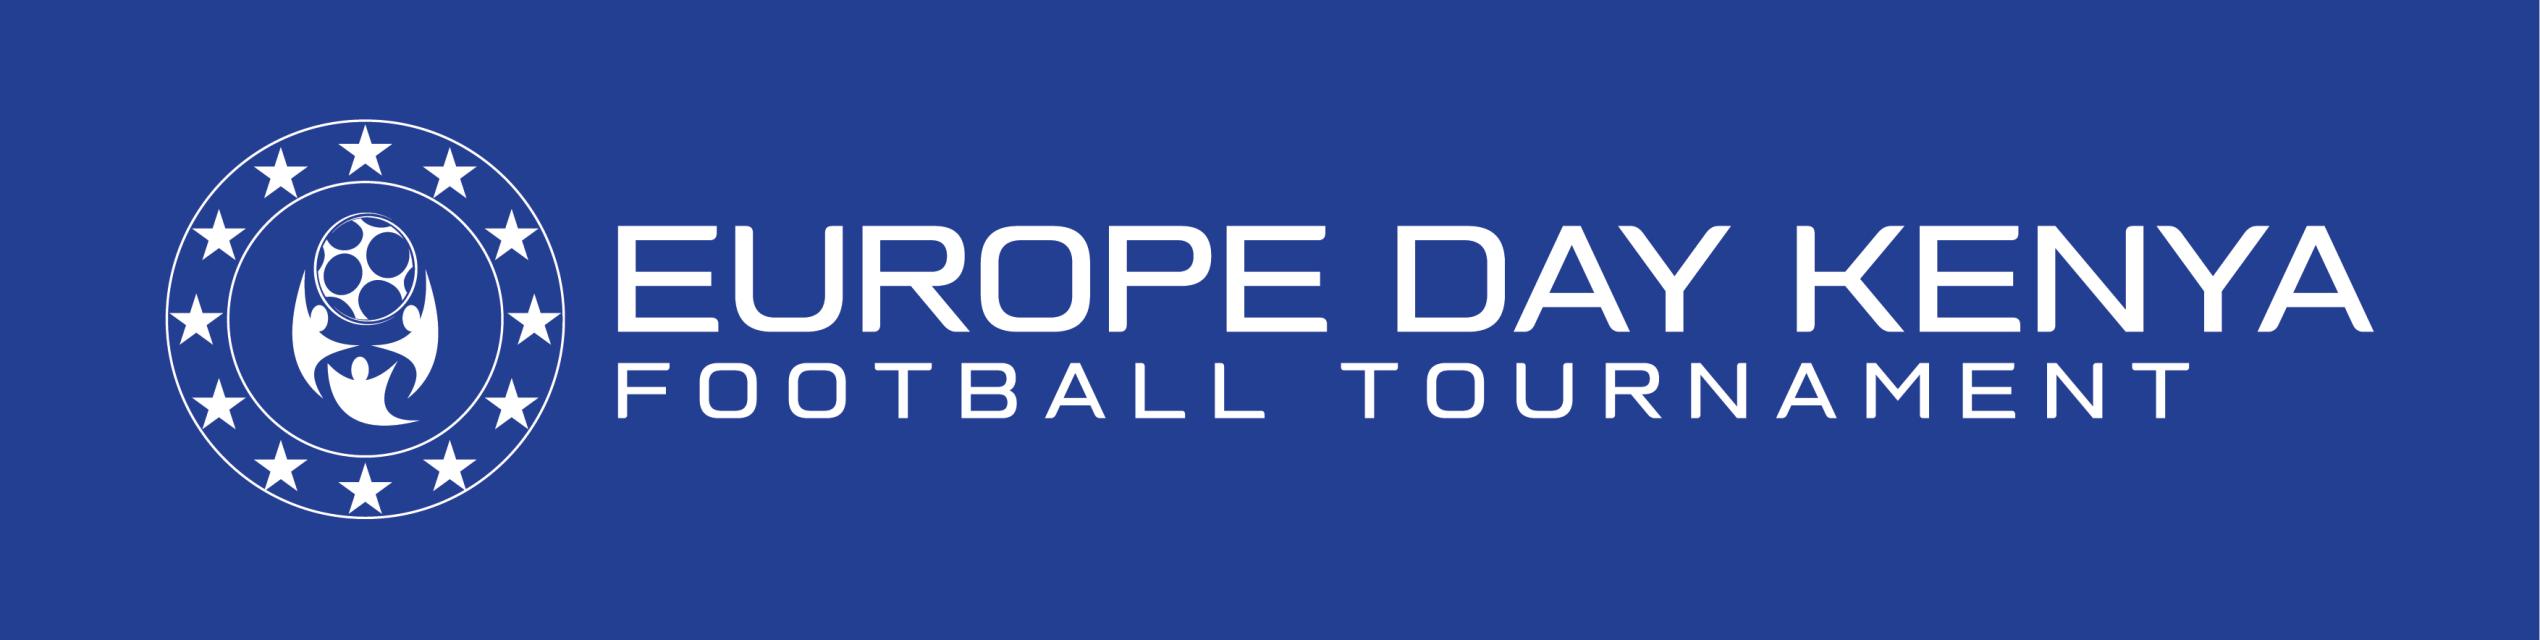 Europe Day Kenya Football Tournament